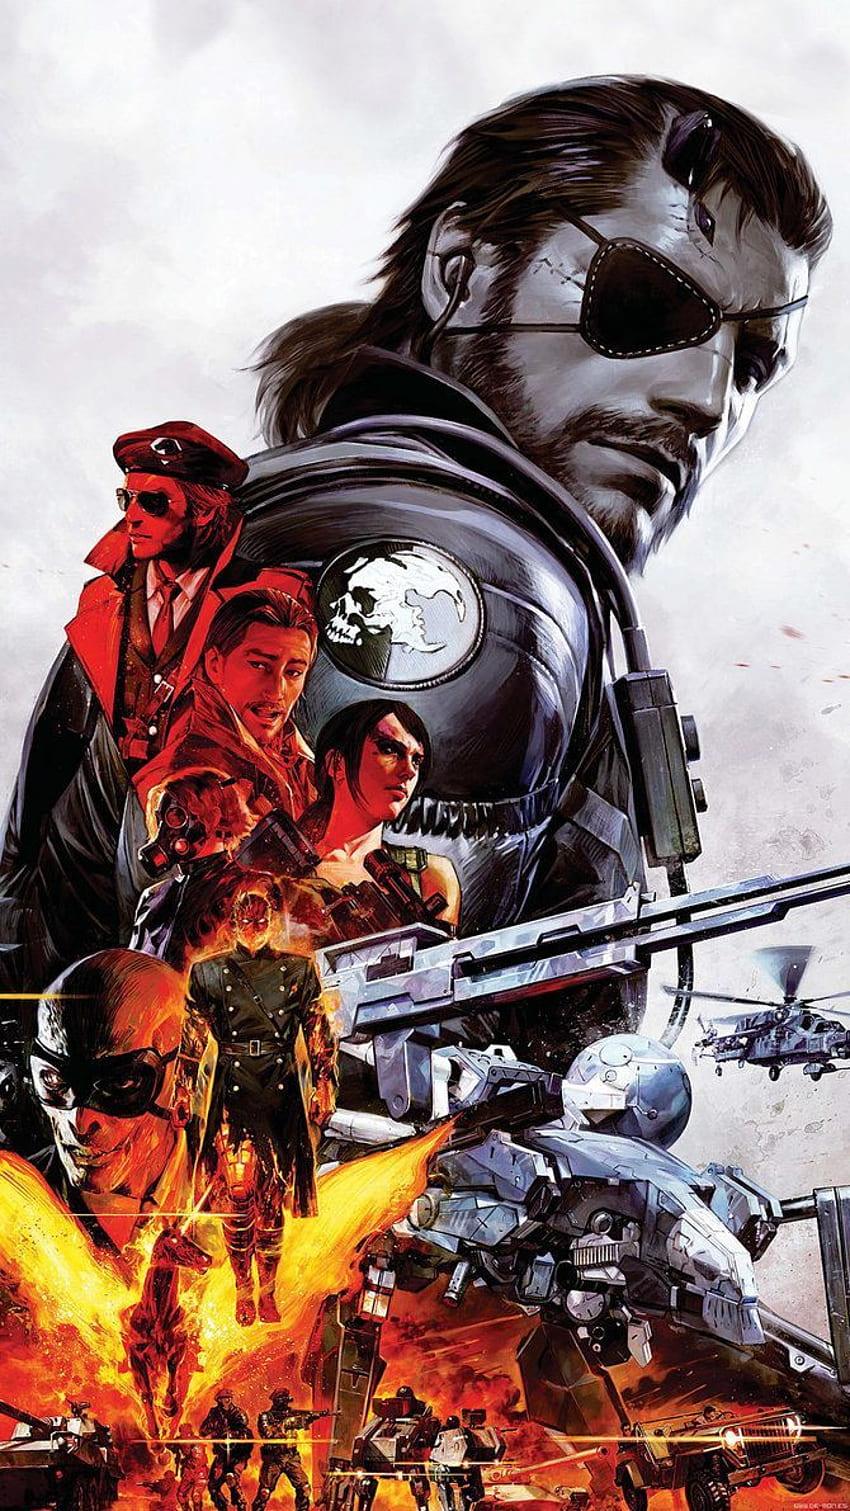 Smartphone Metal Gear Solid V de De MonVarela, Metal Gear Solid 5 Papel de parede de celular HD